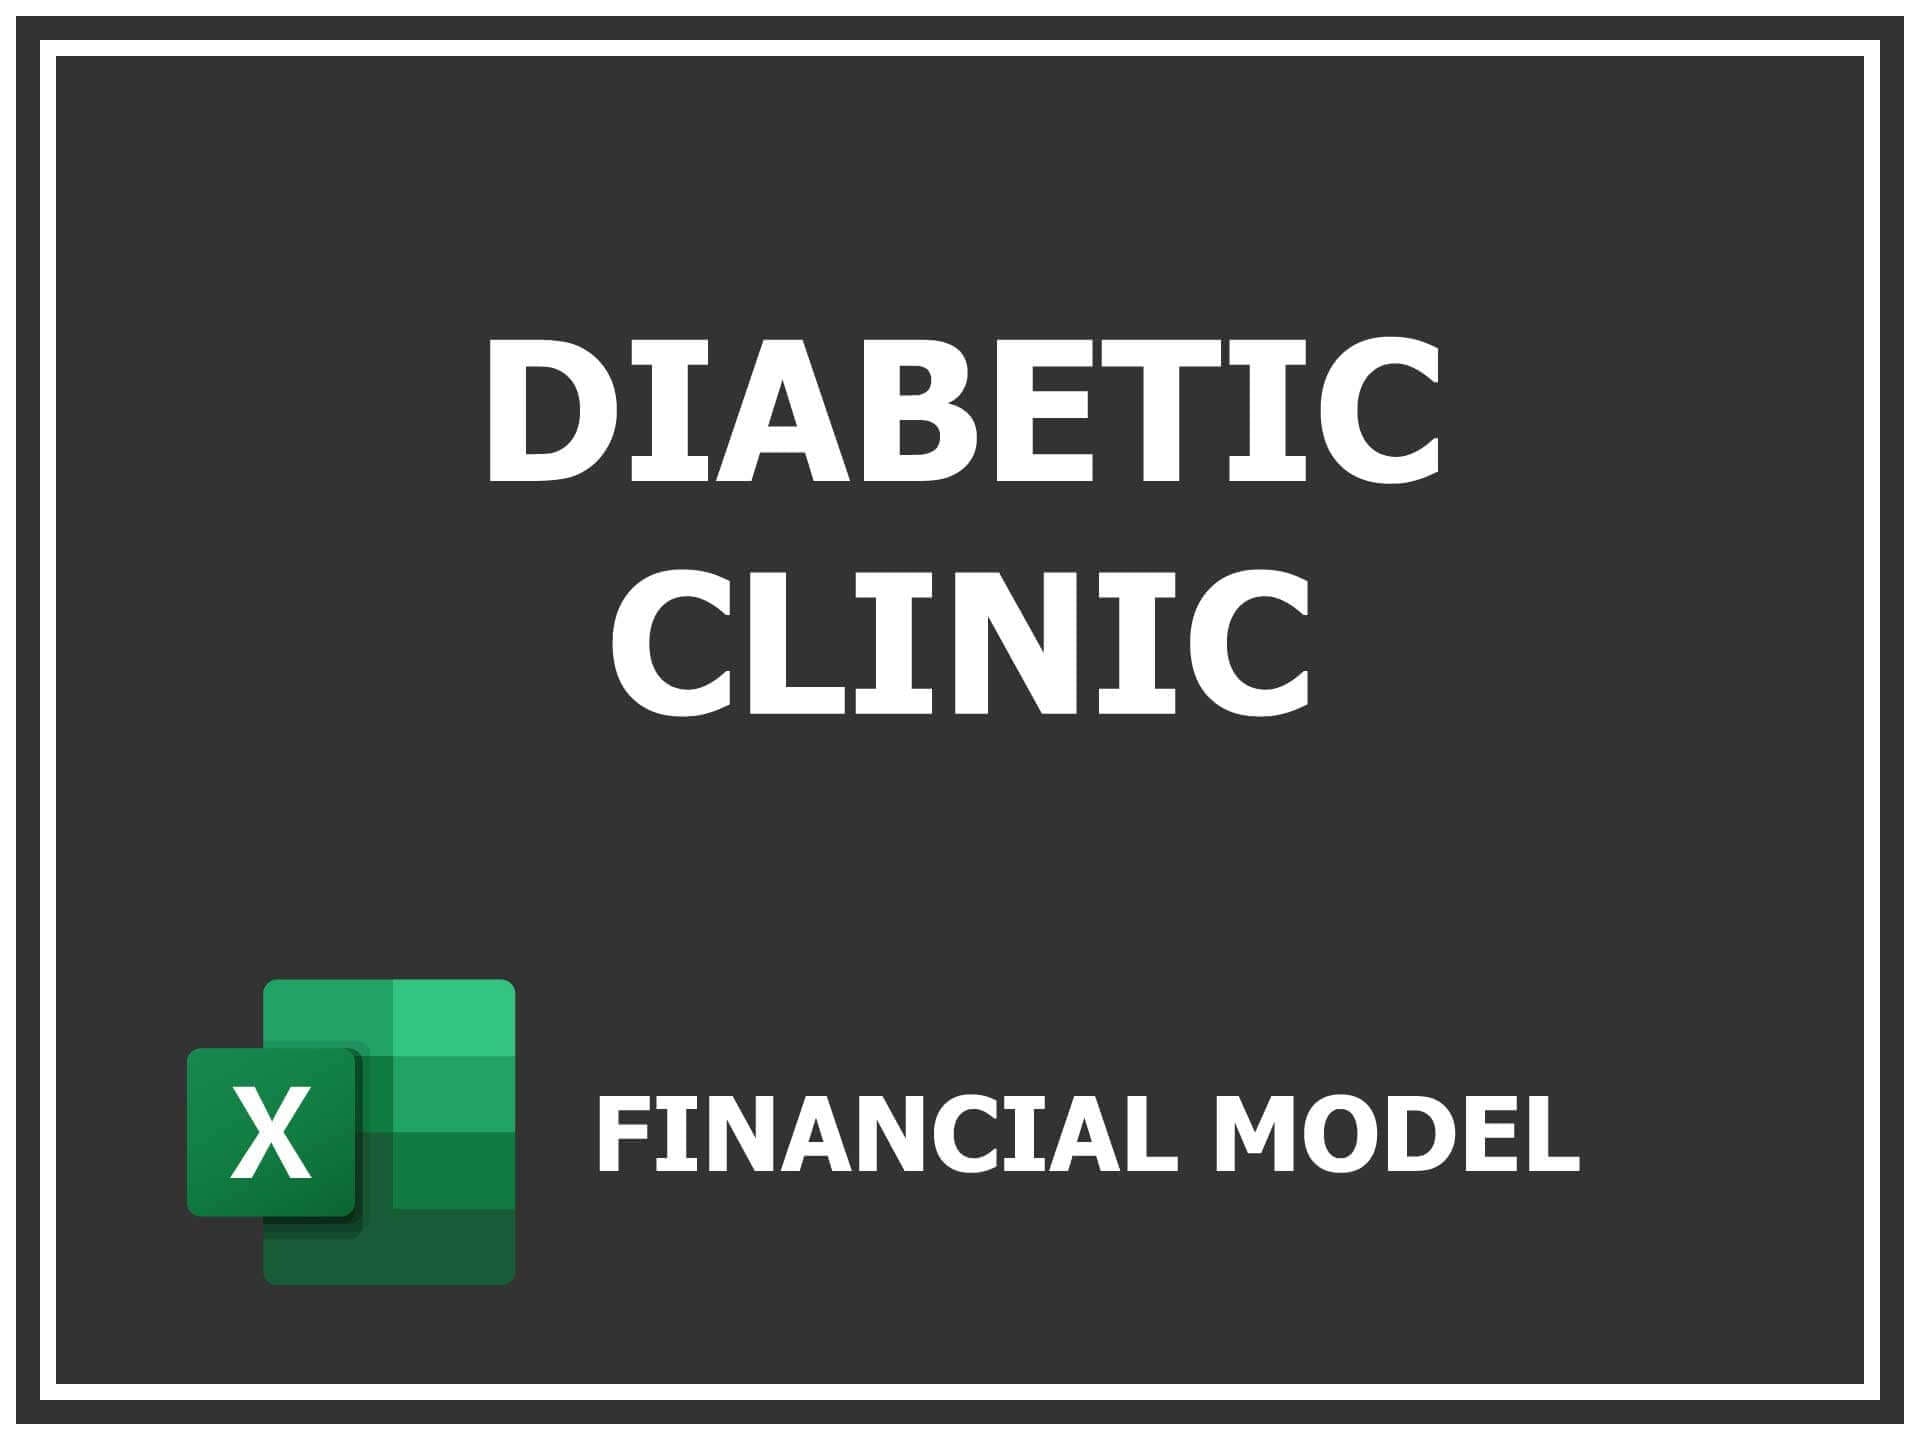 Diabetic Clinic